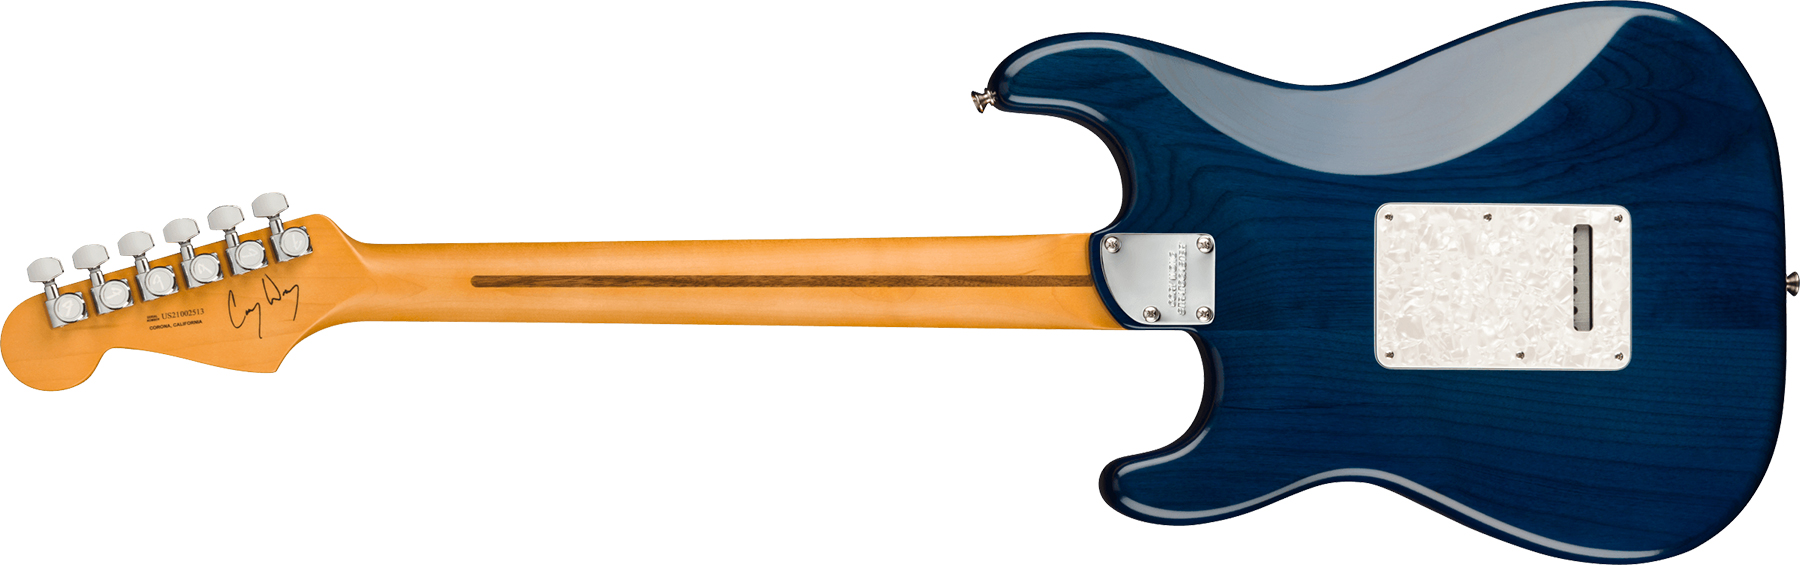 Fender Cory Wong Strat Signature Usa 3s Trem Rw - Sapphire Blue Transparent - Str shape electric guitar - Variation 1